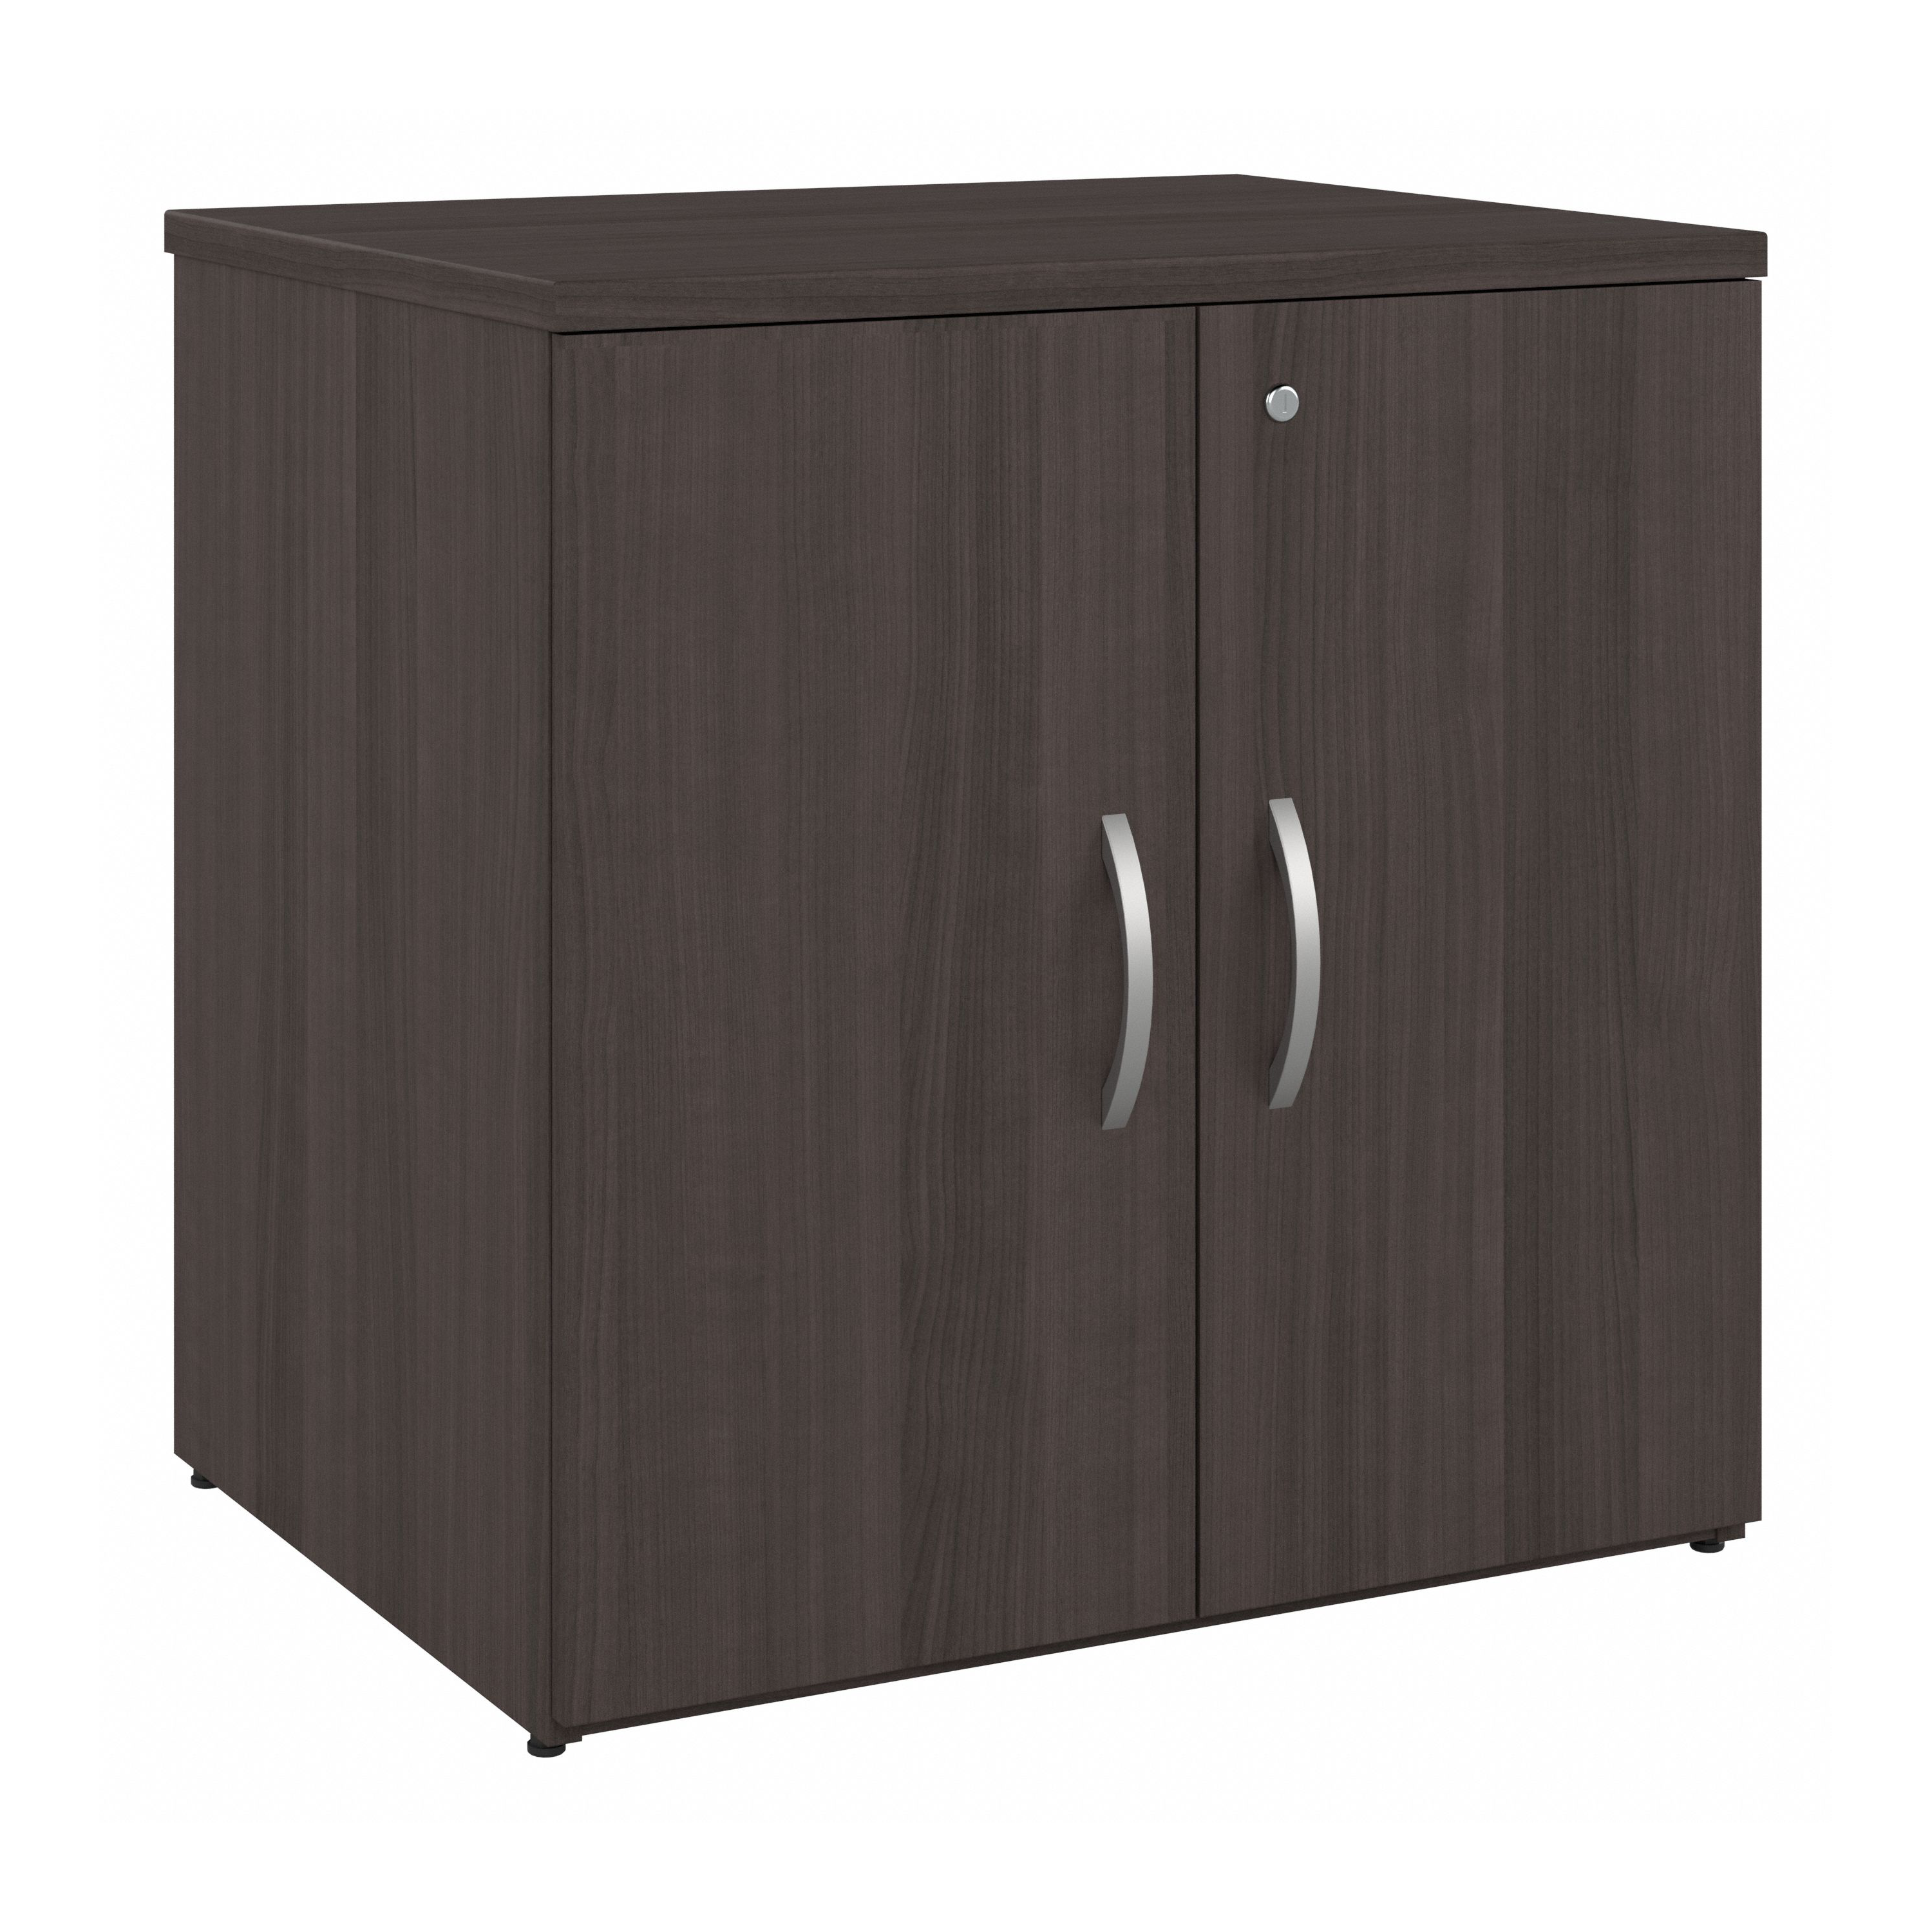 Shop Bush Business Furniture Studio C Office Storage Cabinet with Doors 02 SCS130SG #color_storm gray